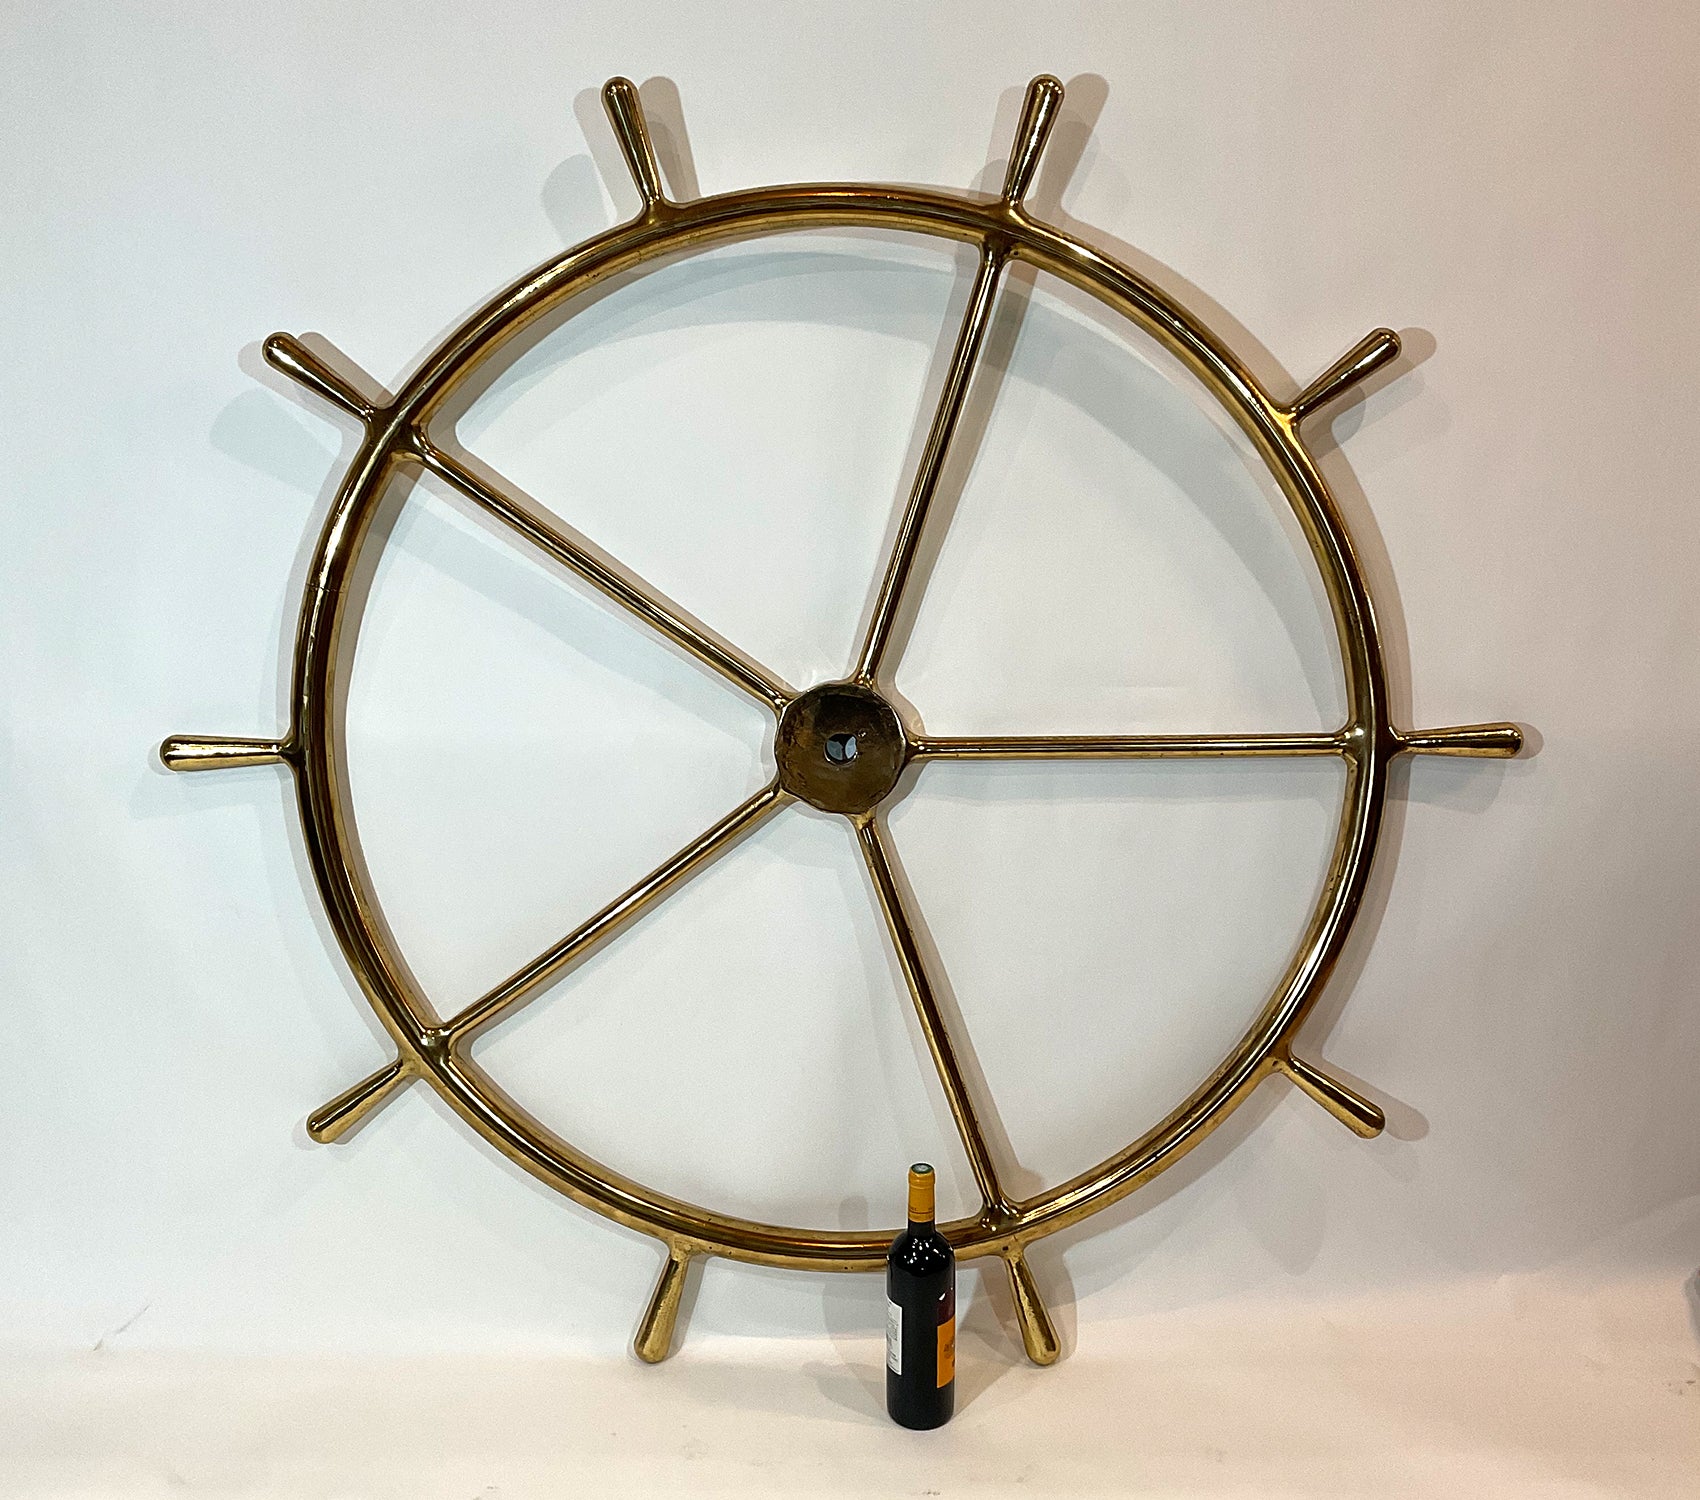 Massive Solid Brass Ships Wheel - Lannan Gallery